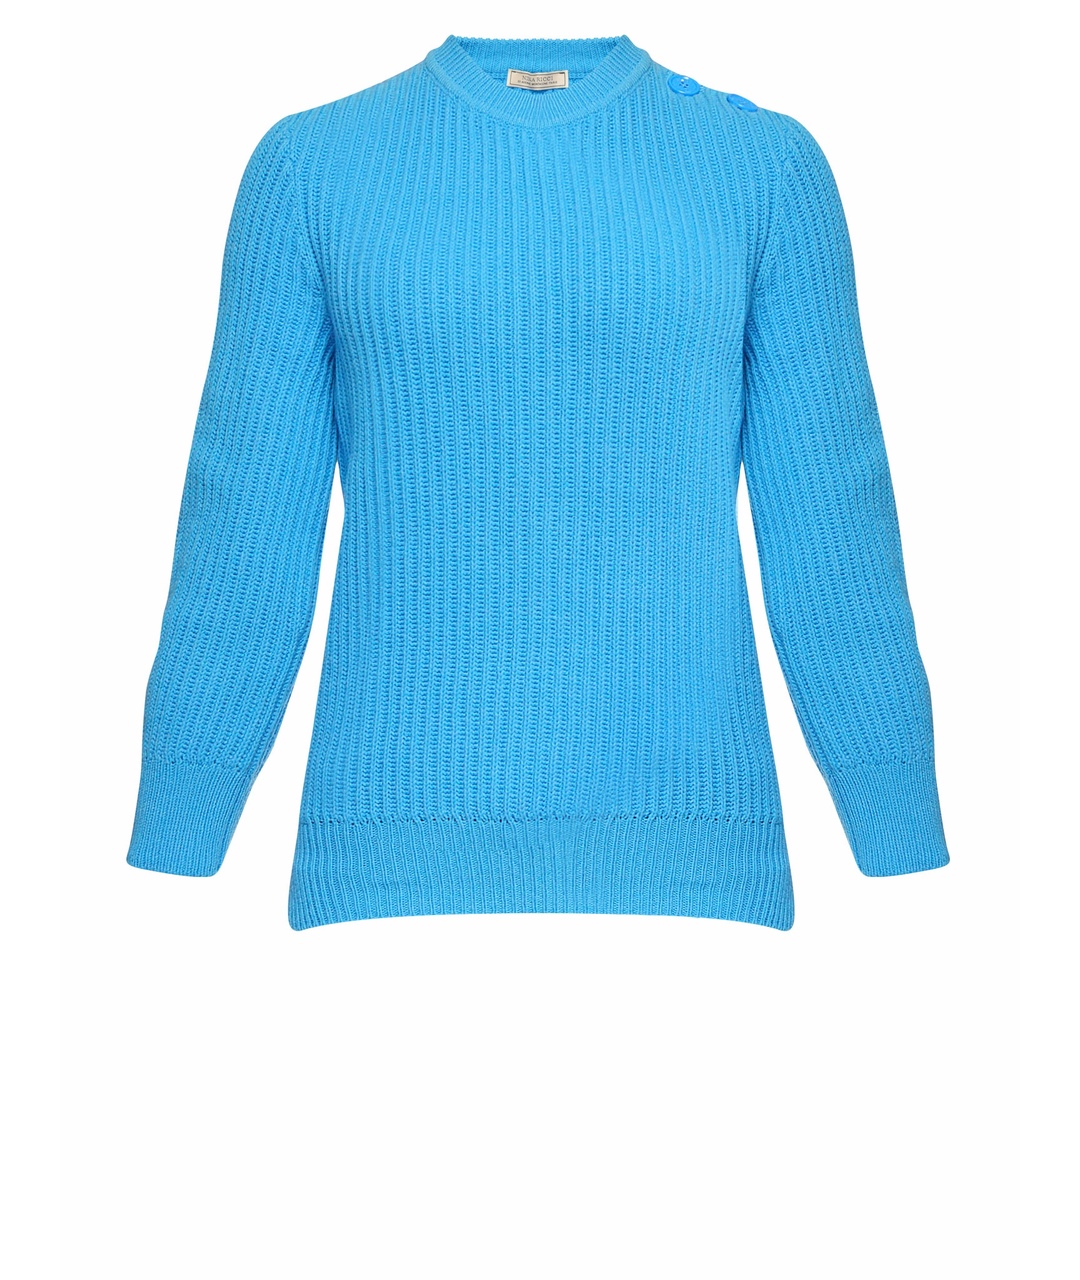 NINA RICCI Голубой шерстяной джемпер / свитер, фото 1